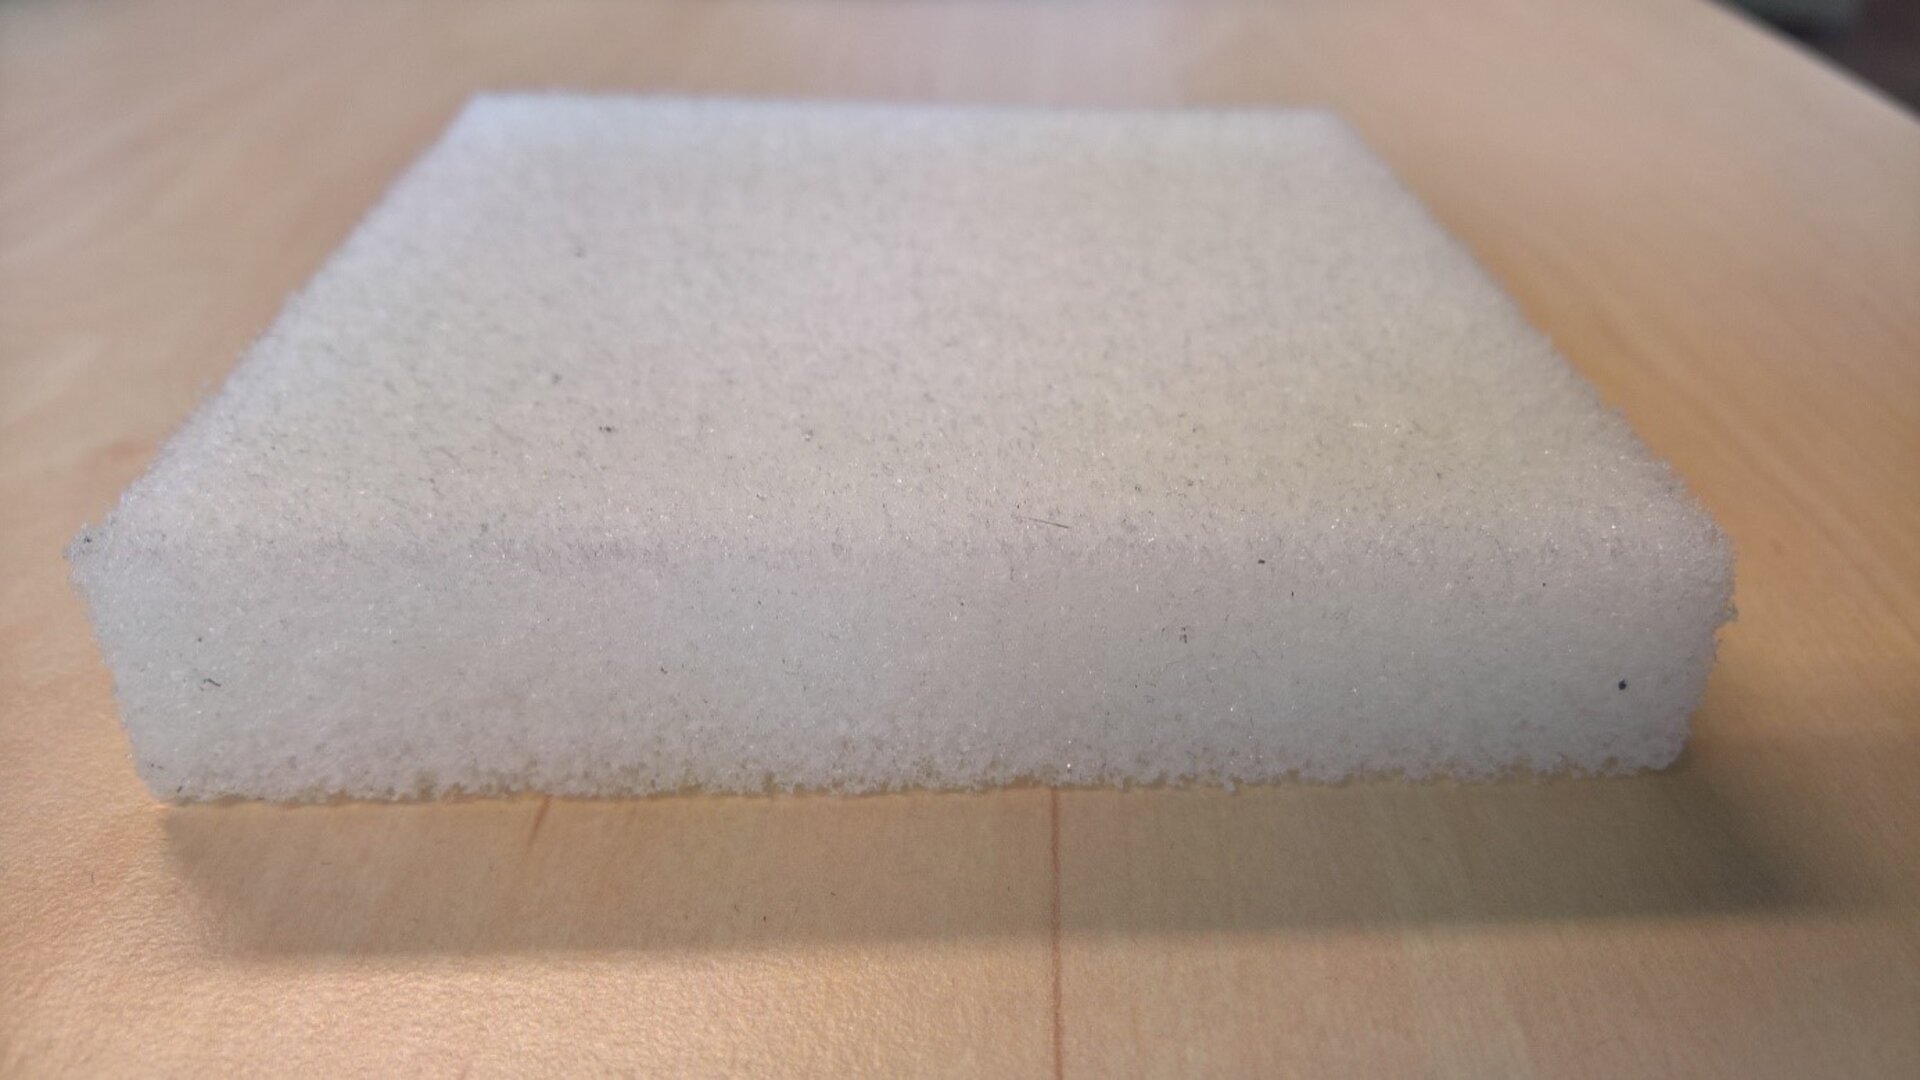 polyurethane foam for baby mattress is it safe